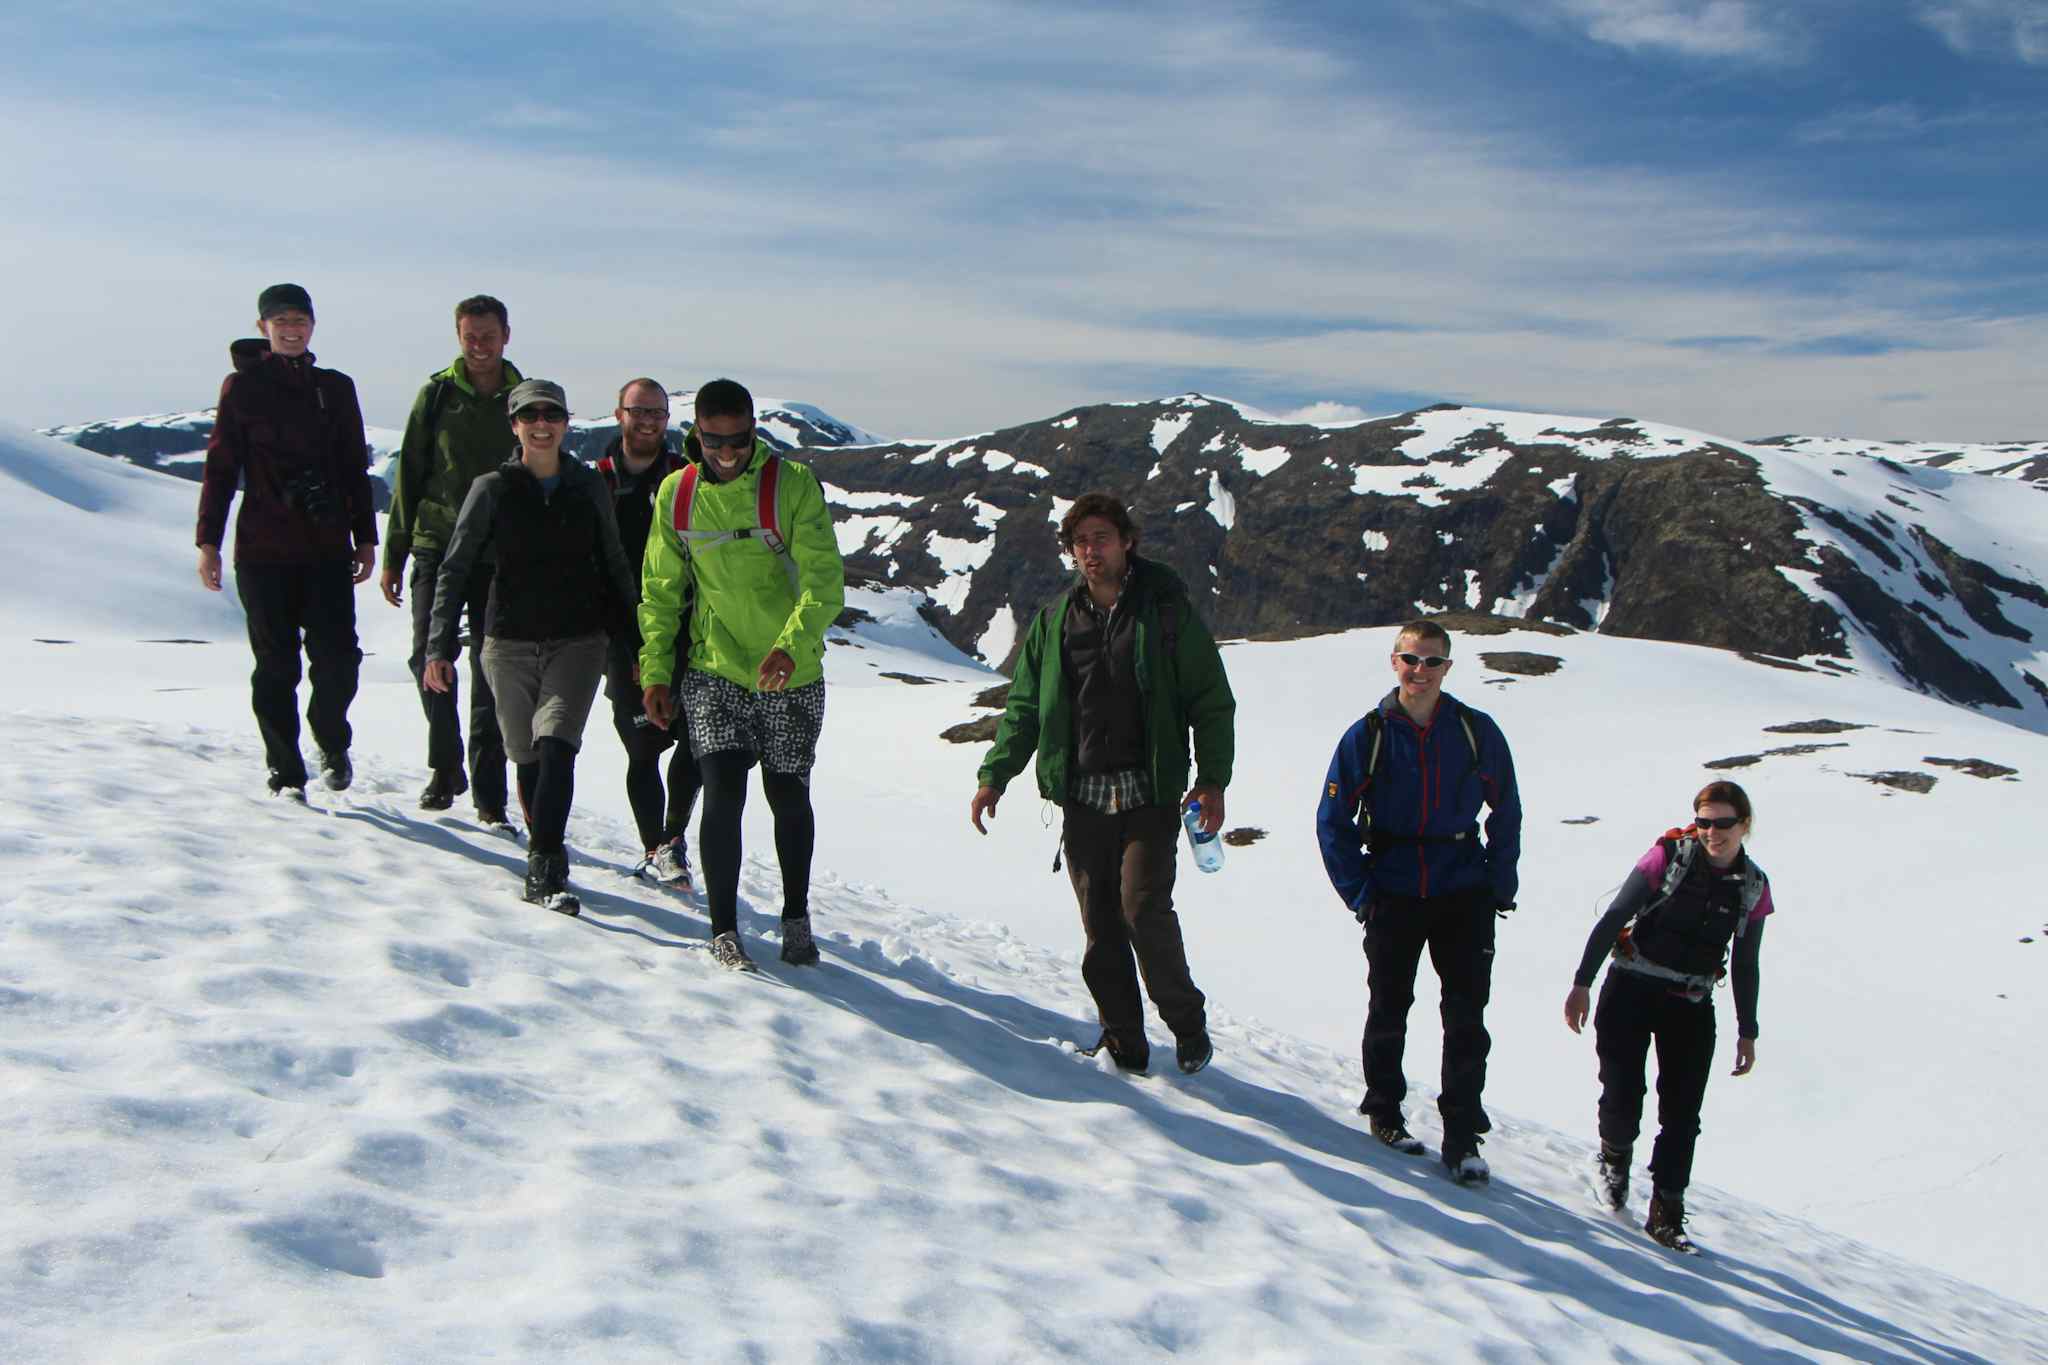 Norway Hiking on snow
Host image: Nordic Ventures